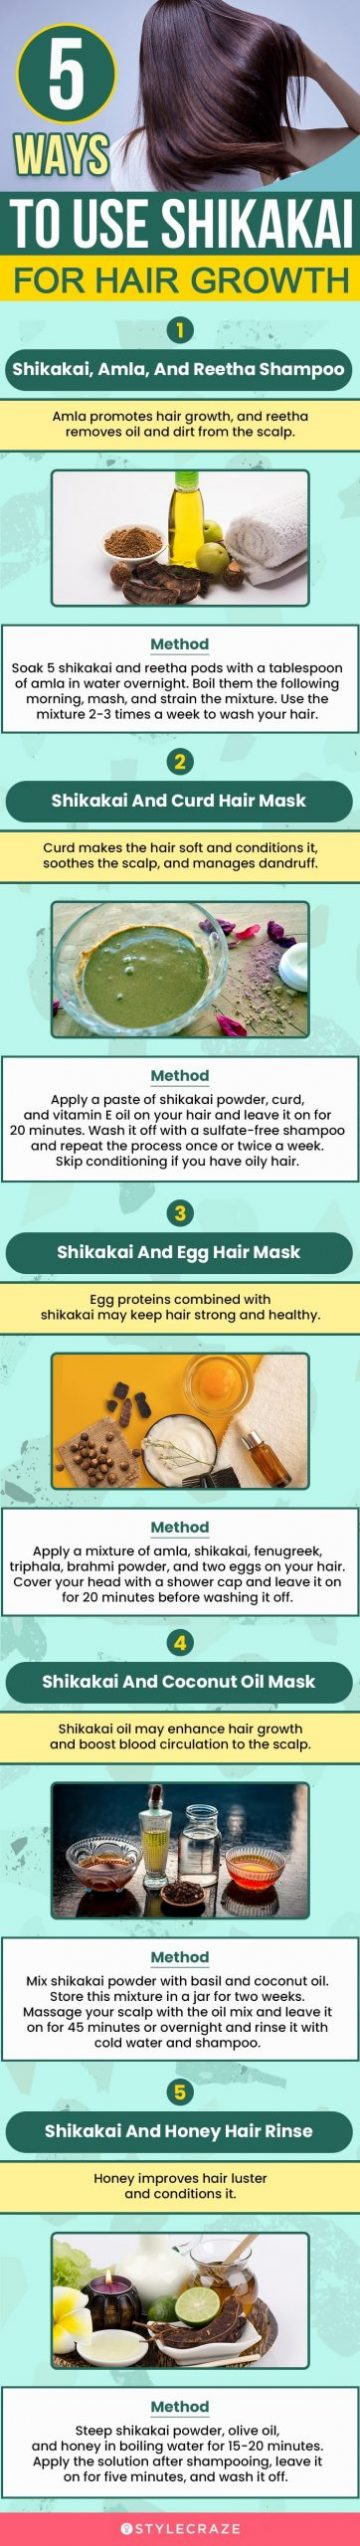 5 ways to use shikakai for hair growth (infographic)